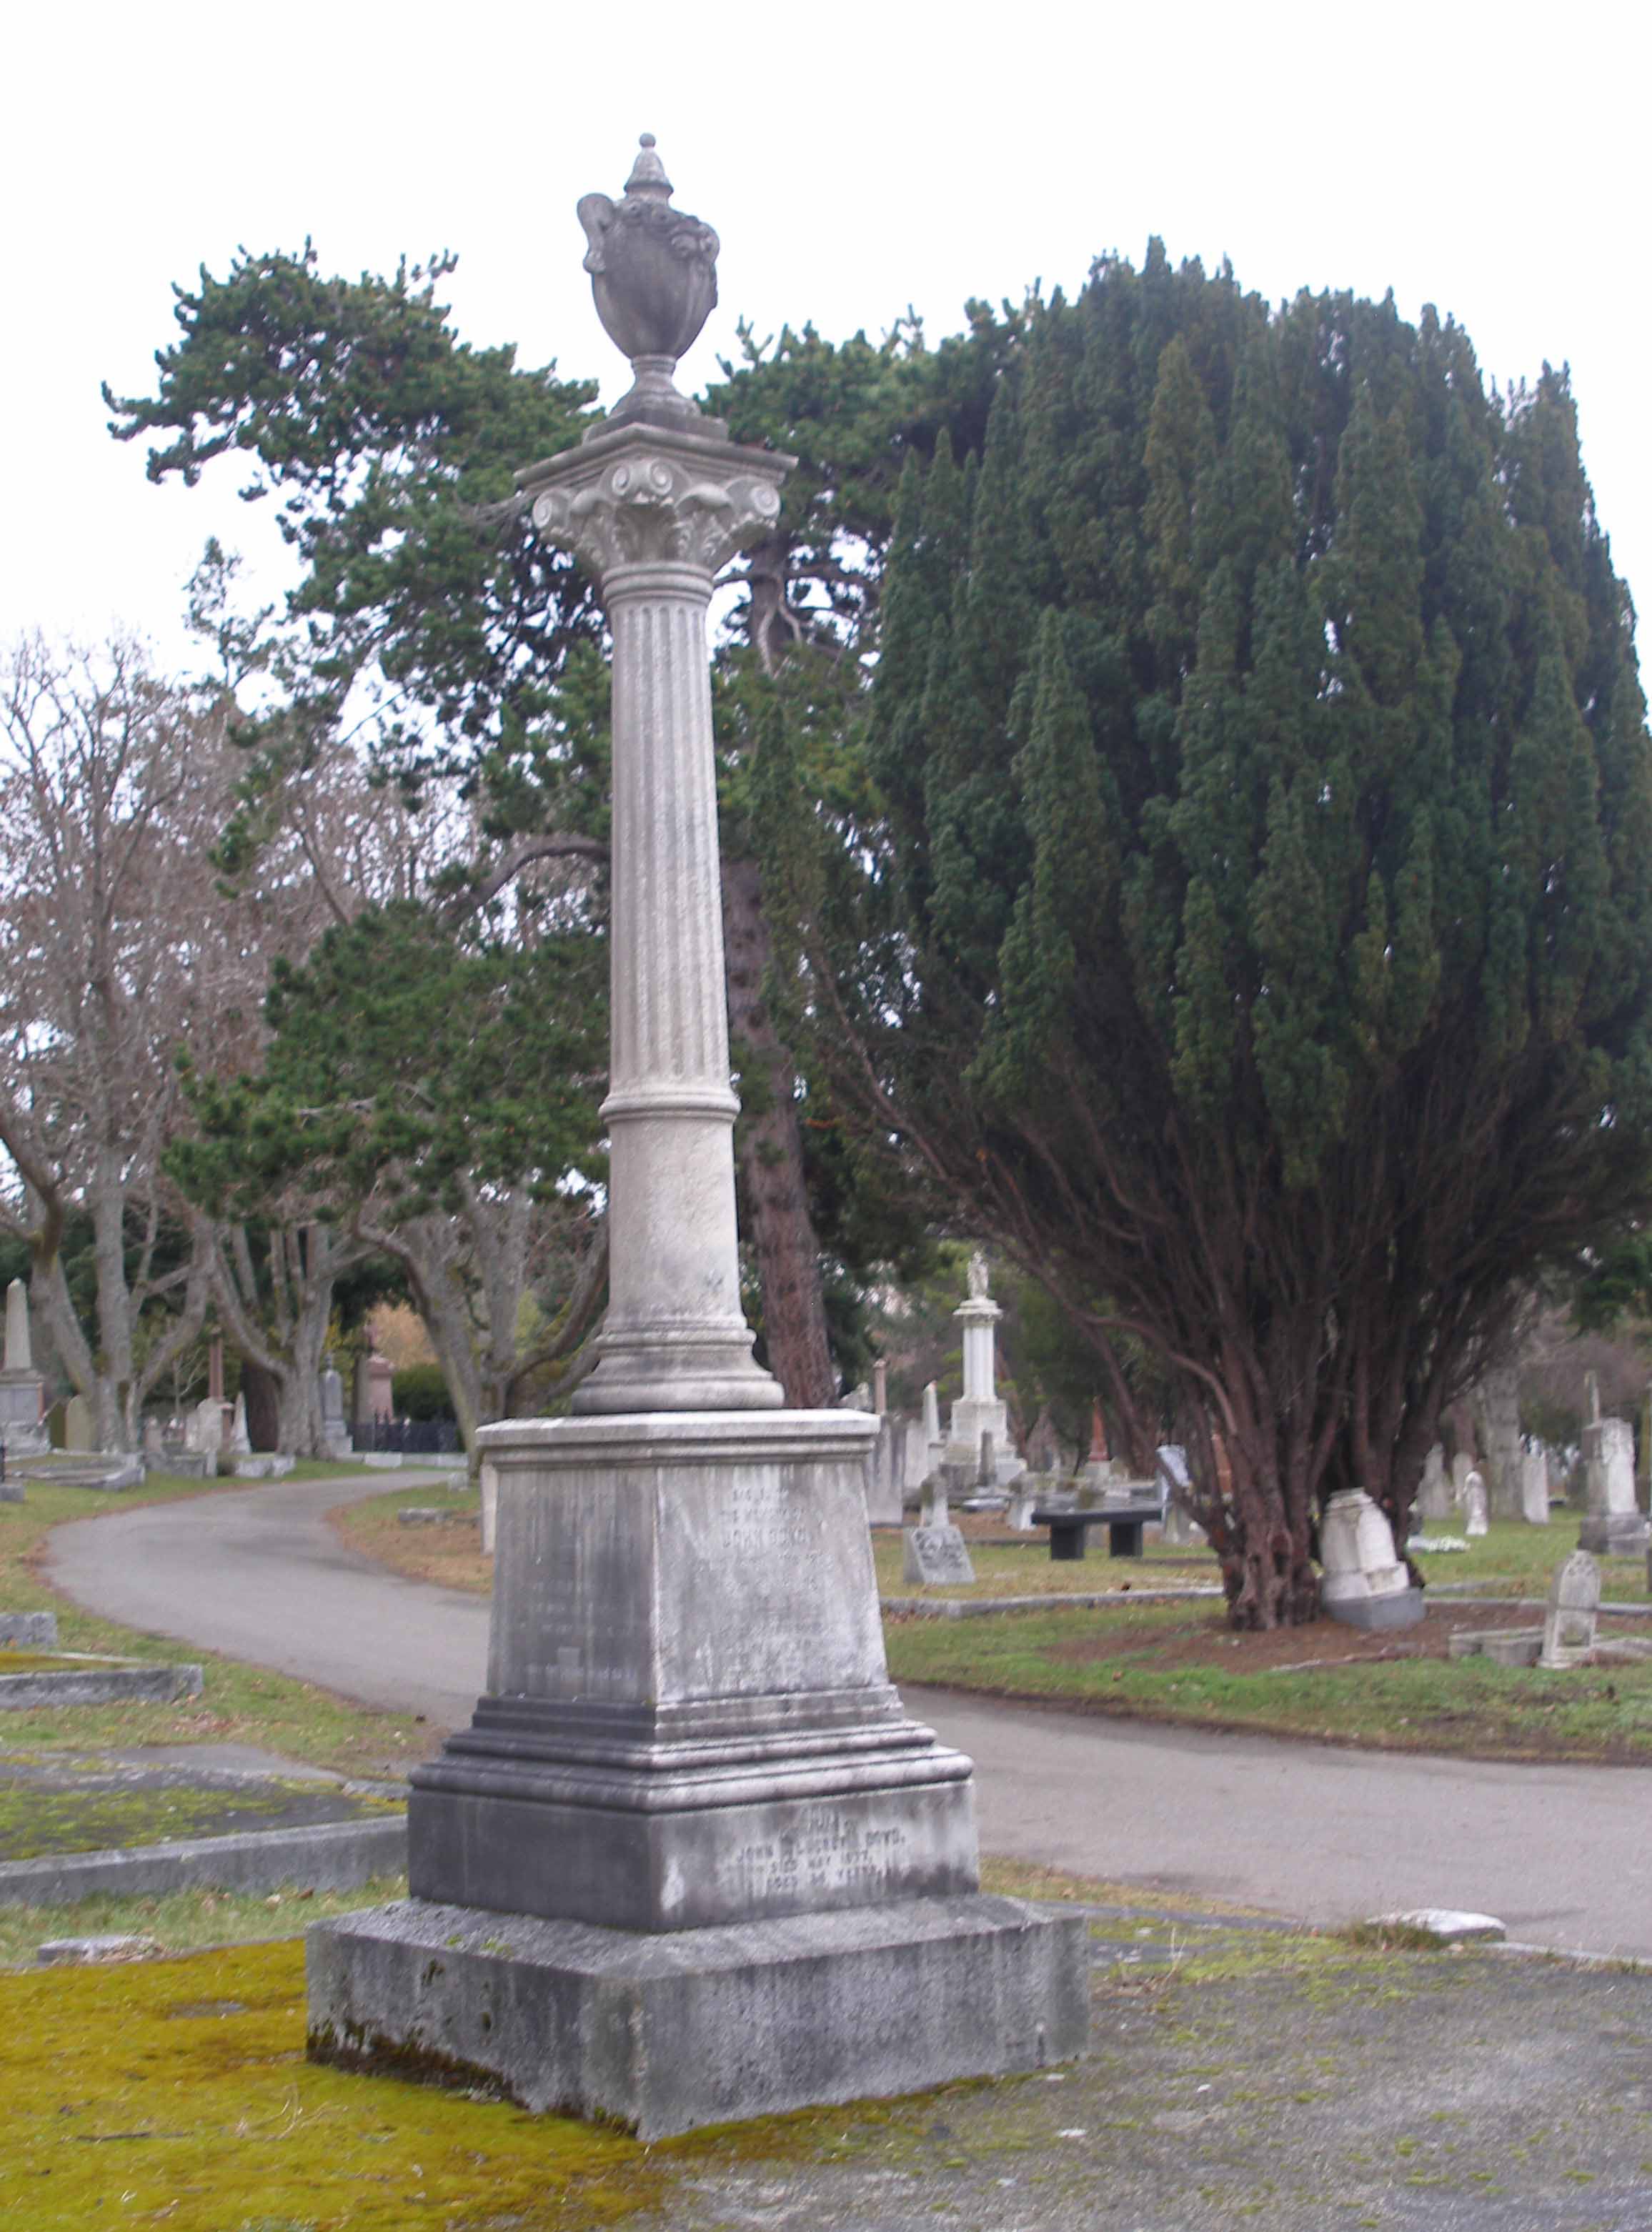 John Boyd tomb, Ross Bay Cemetery